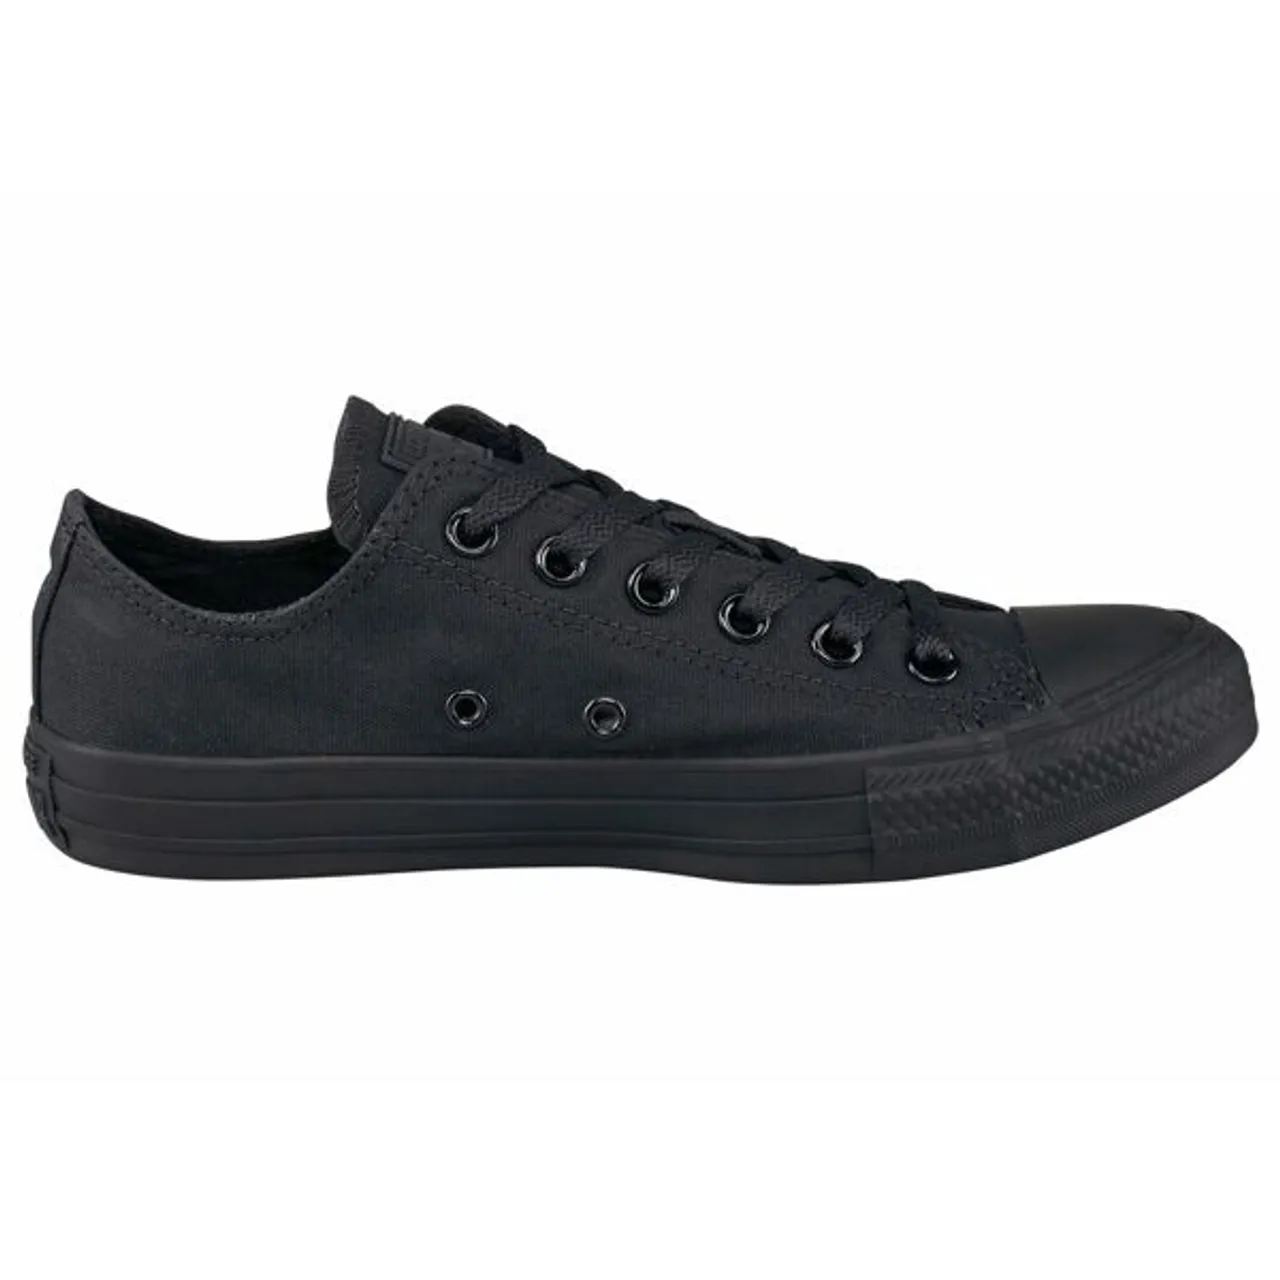 Sneaker CONVERSE "Chuck Taylor All Star Seasonal Ox Monocrome" Gr. 36, schwarz (black, monochrome) Schuhe Bekleidung